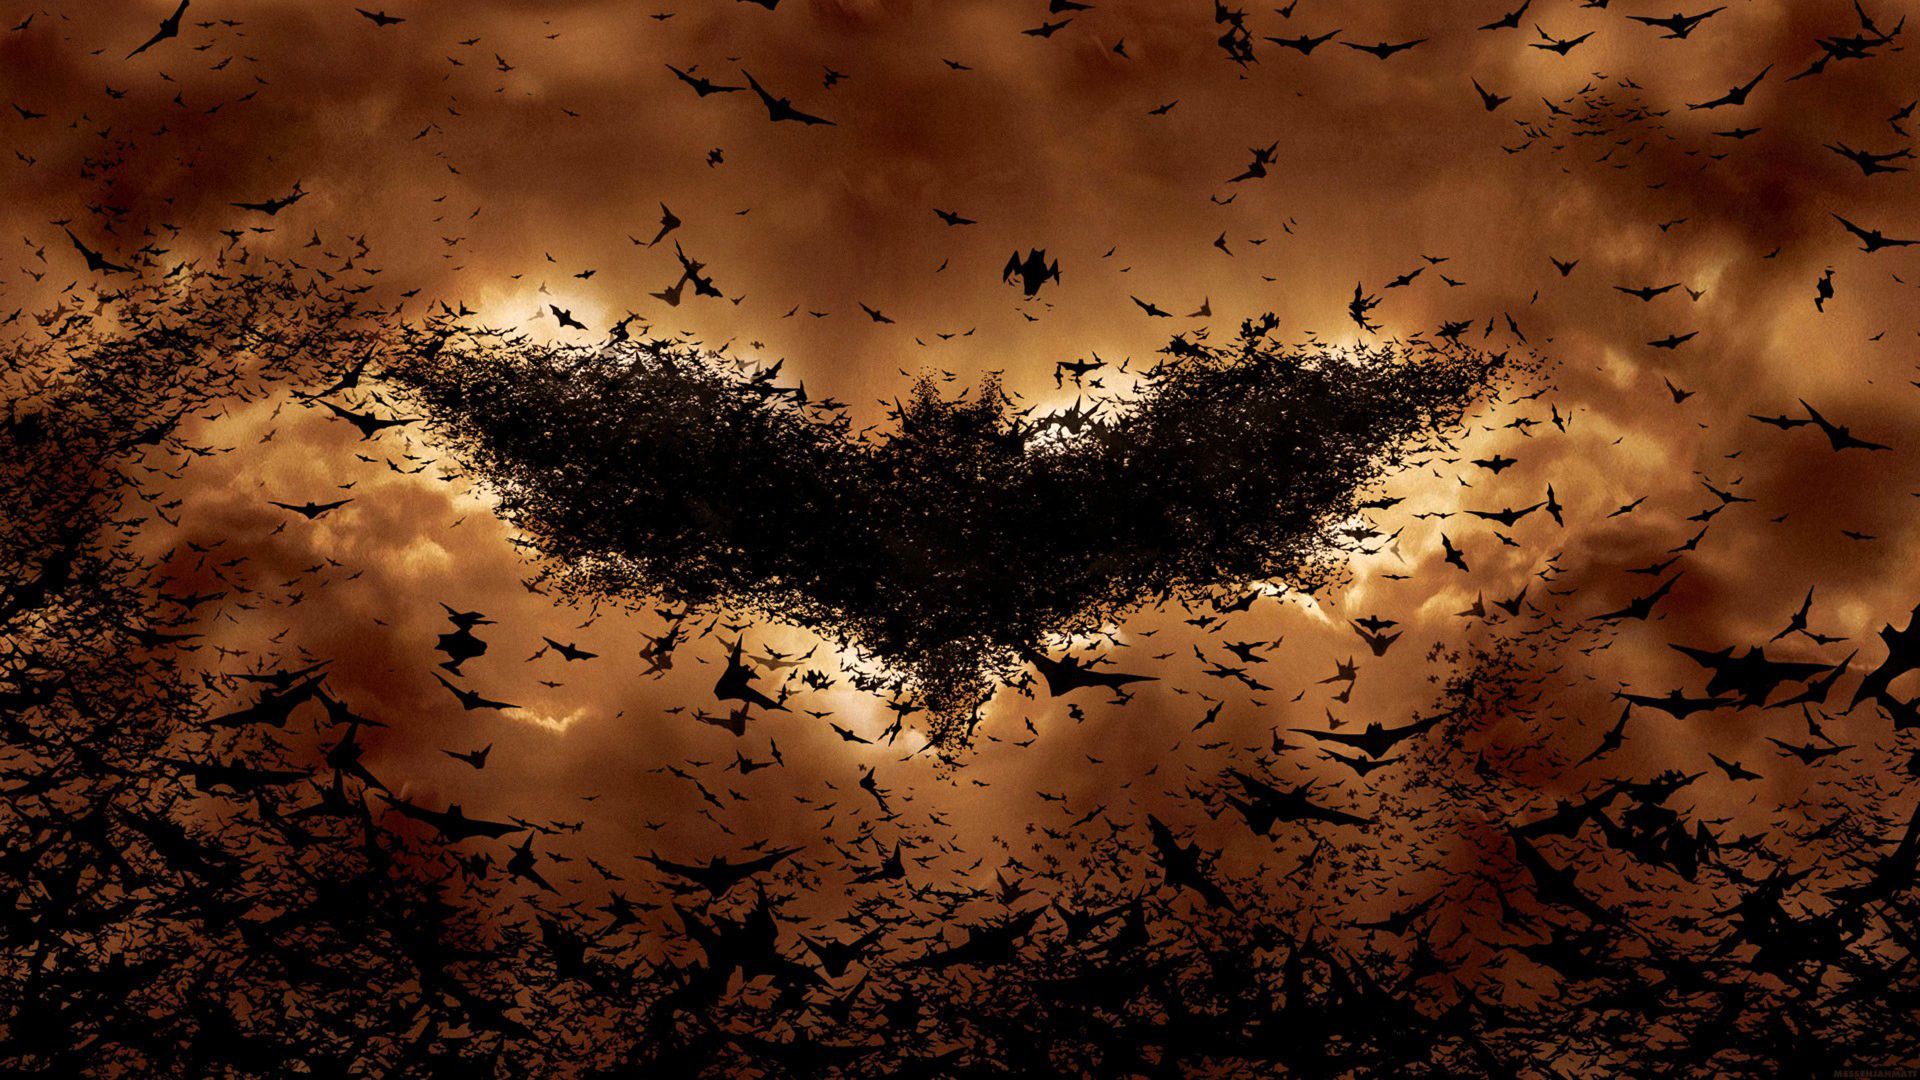 Batman begins, bats, symbol, movie, logo wallpaper, HD image, picture, background, 82d6cd